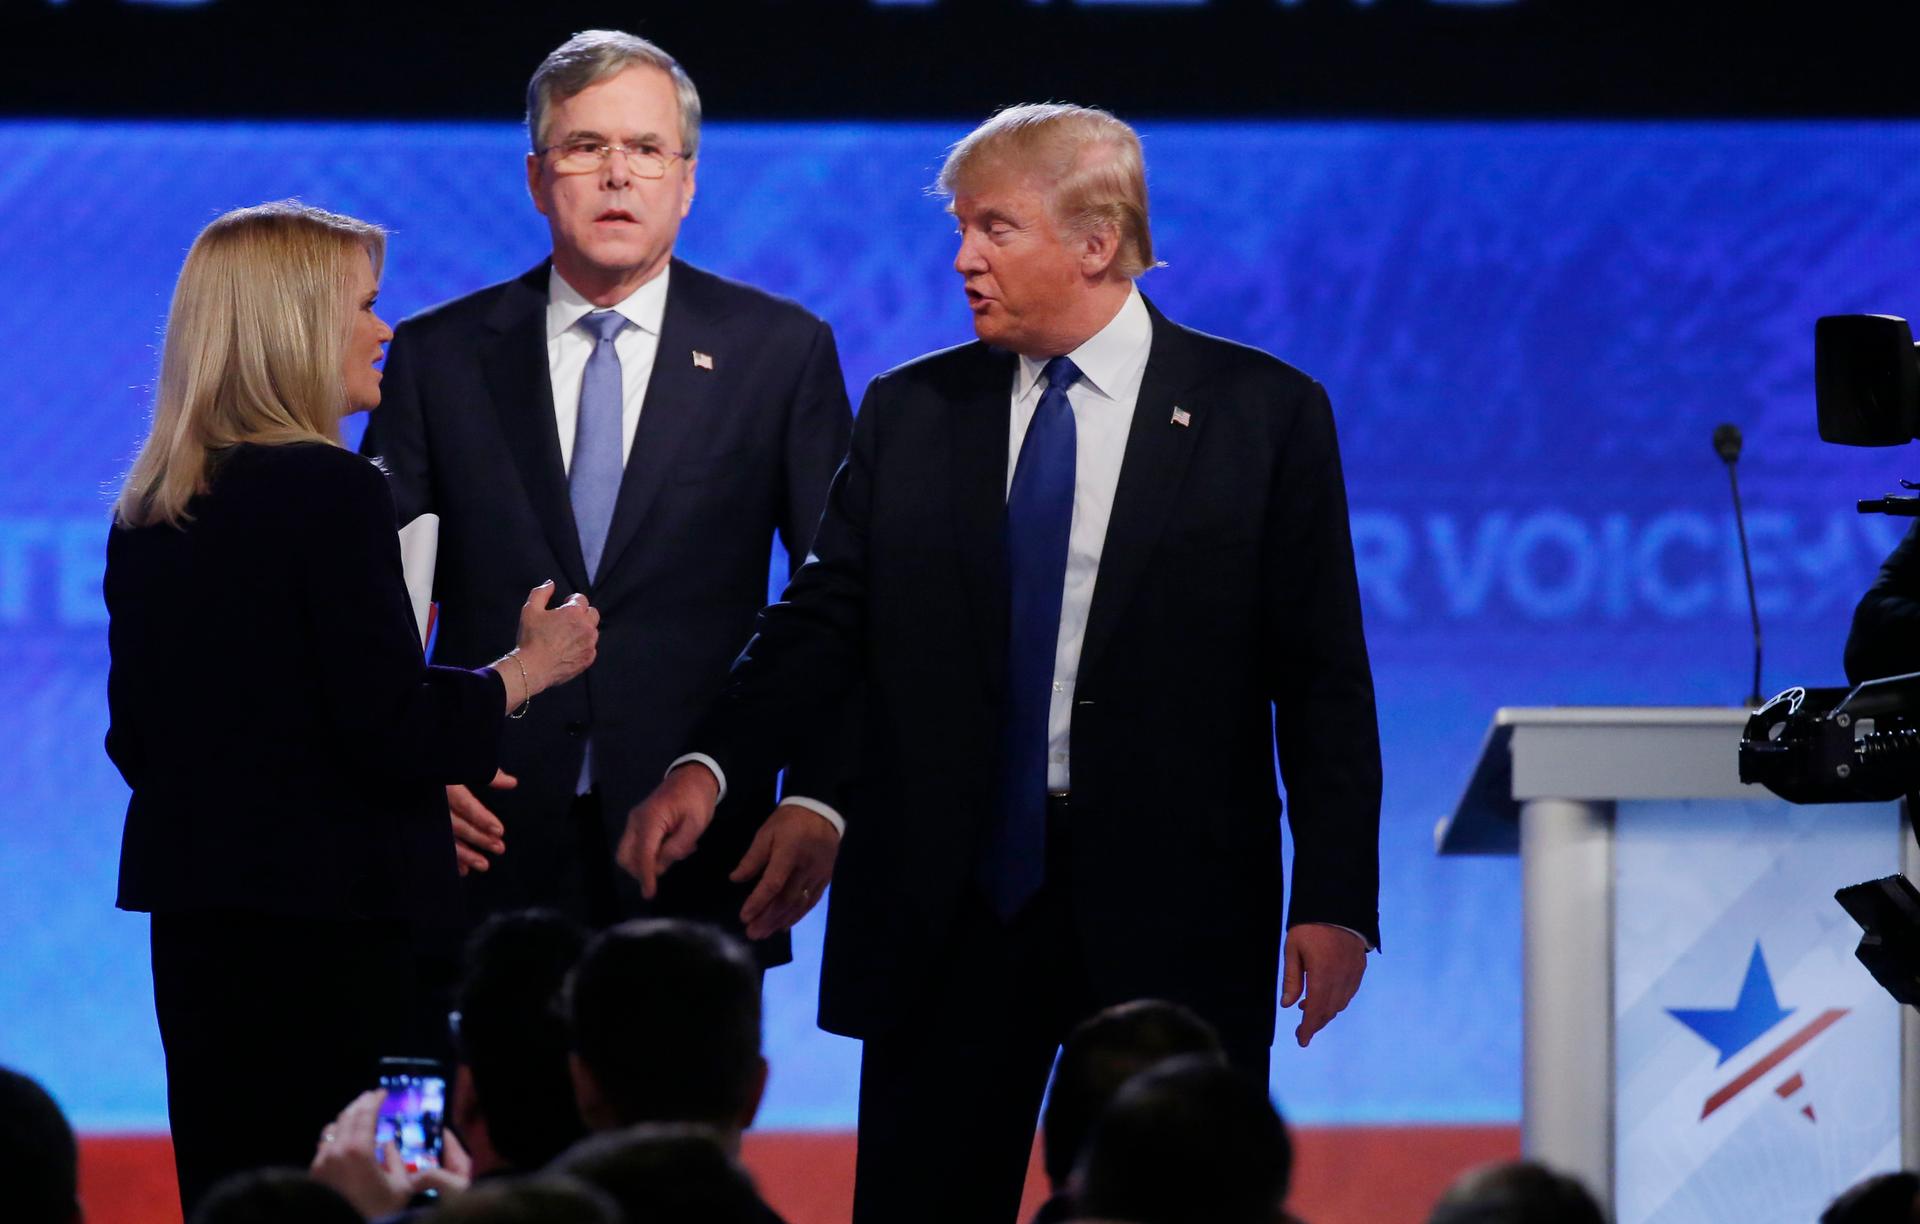 Bush, Trump square off in GOP debate